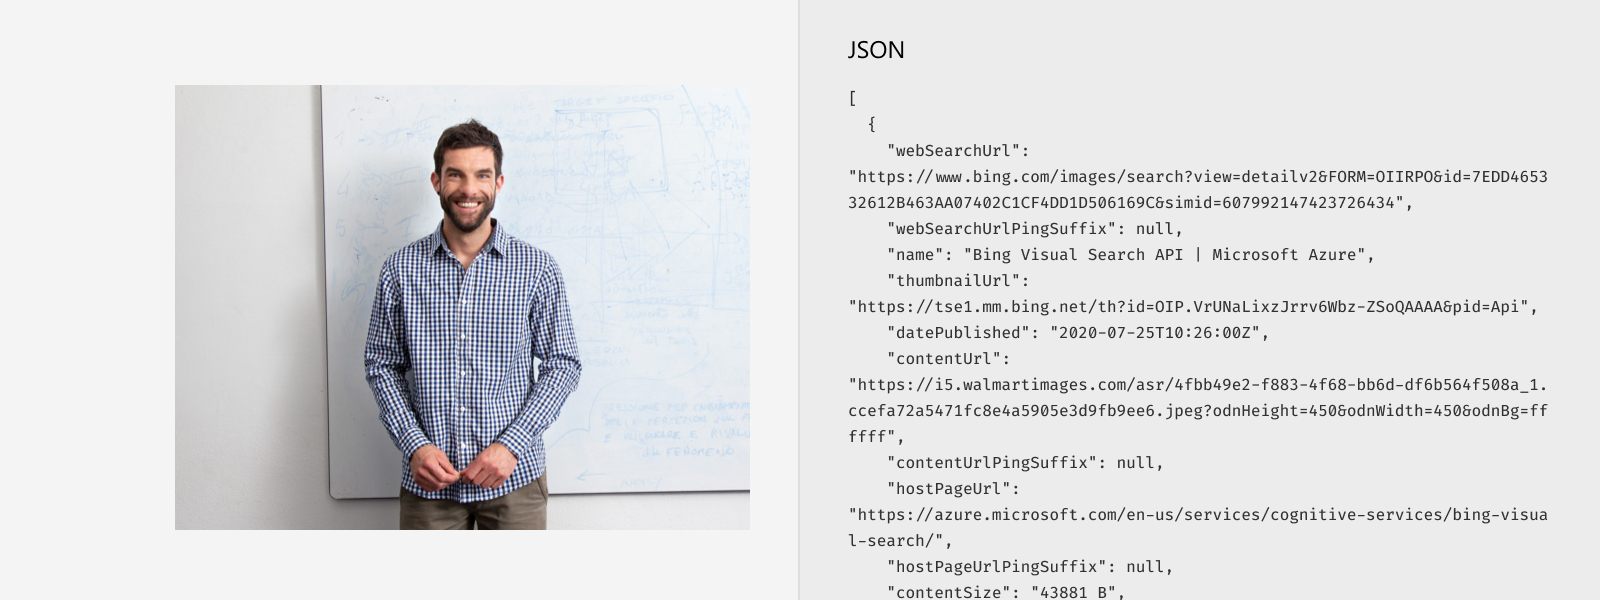 Illustrates the representative JSON response for Bing Visual Search API.